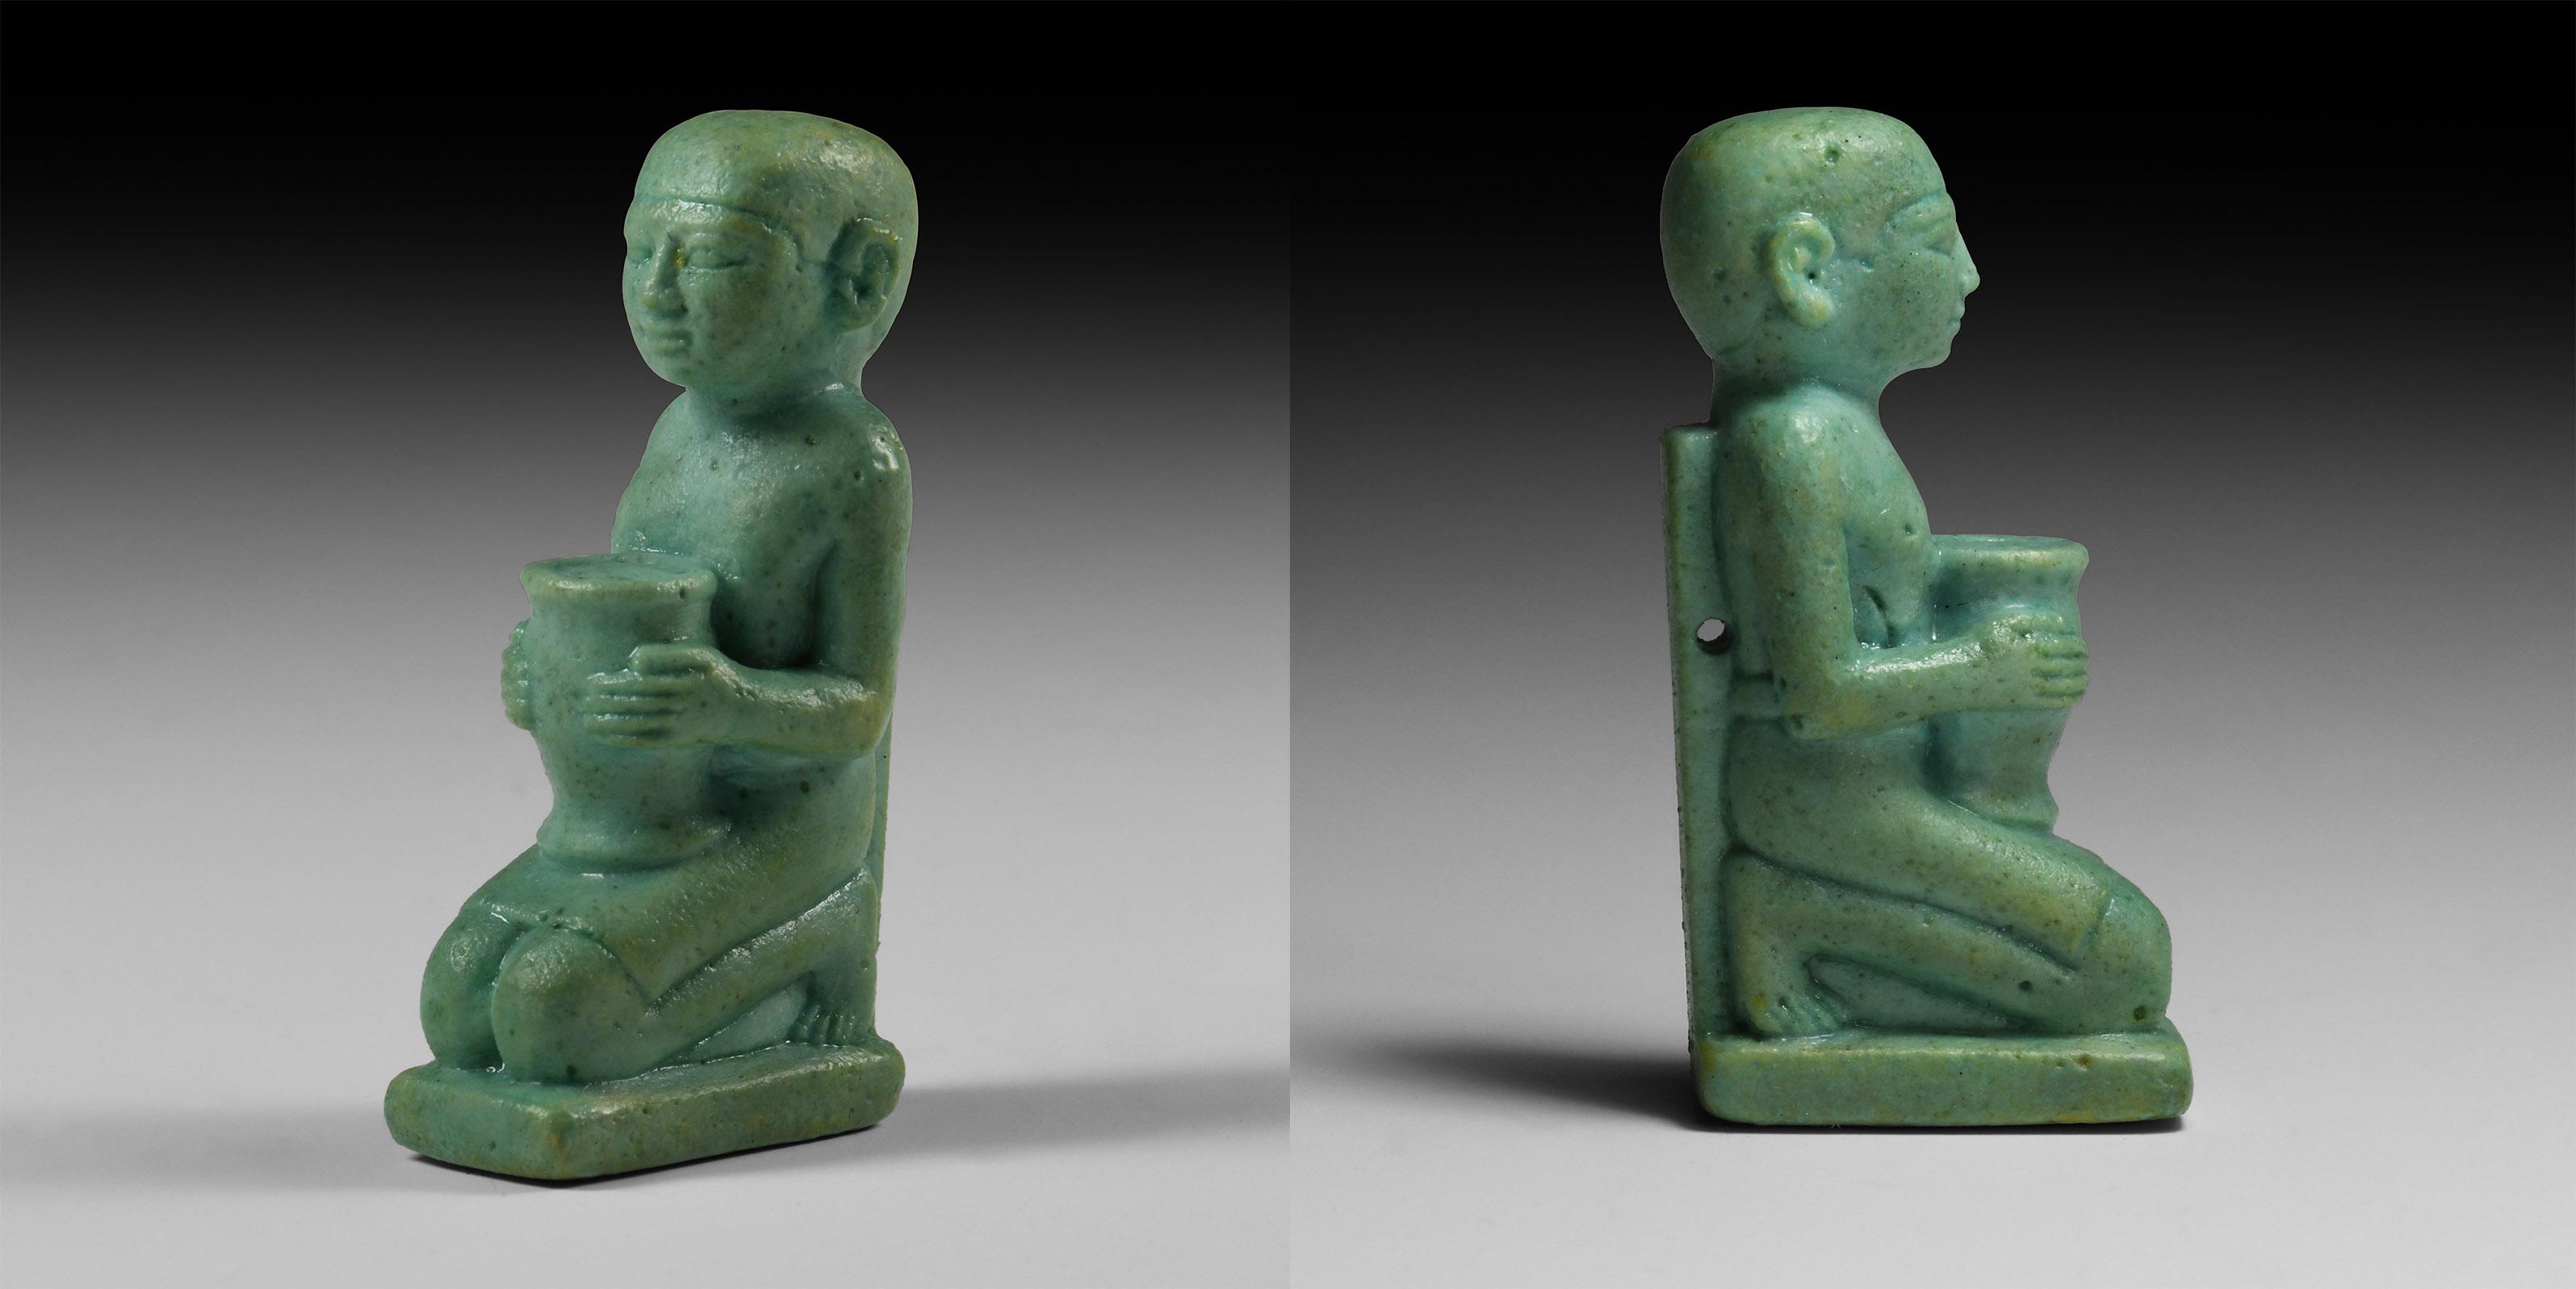 Rare Antique Glazed Faience Pendant Duck Amulet Figurine of Ancient Egyptian...LARGE